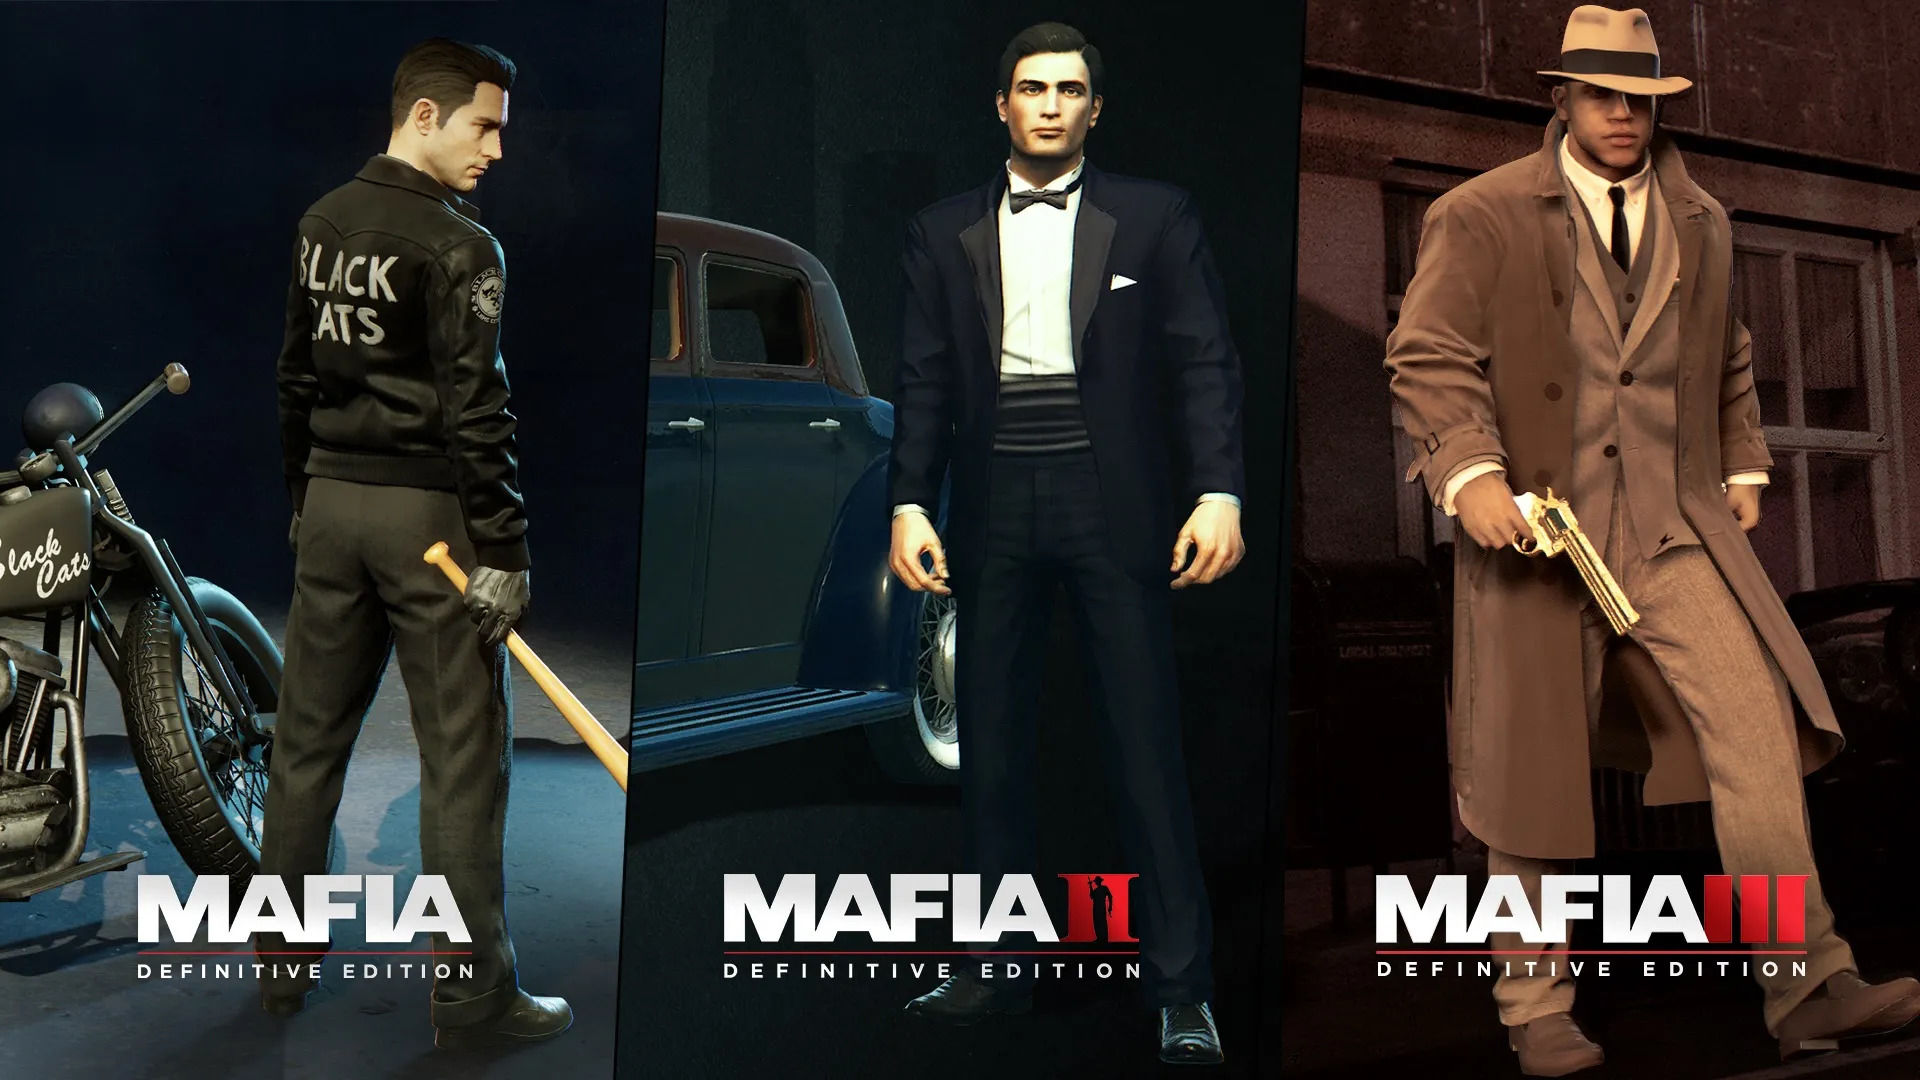 Мафия дефинитив эдишн на русском. Мафия 1 Definitive Edition. Mafia Definitive Edition Томми Анджело. Mafia 3 ремейк. Mafia 3 Definitive Edition.